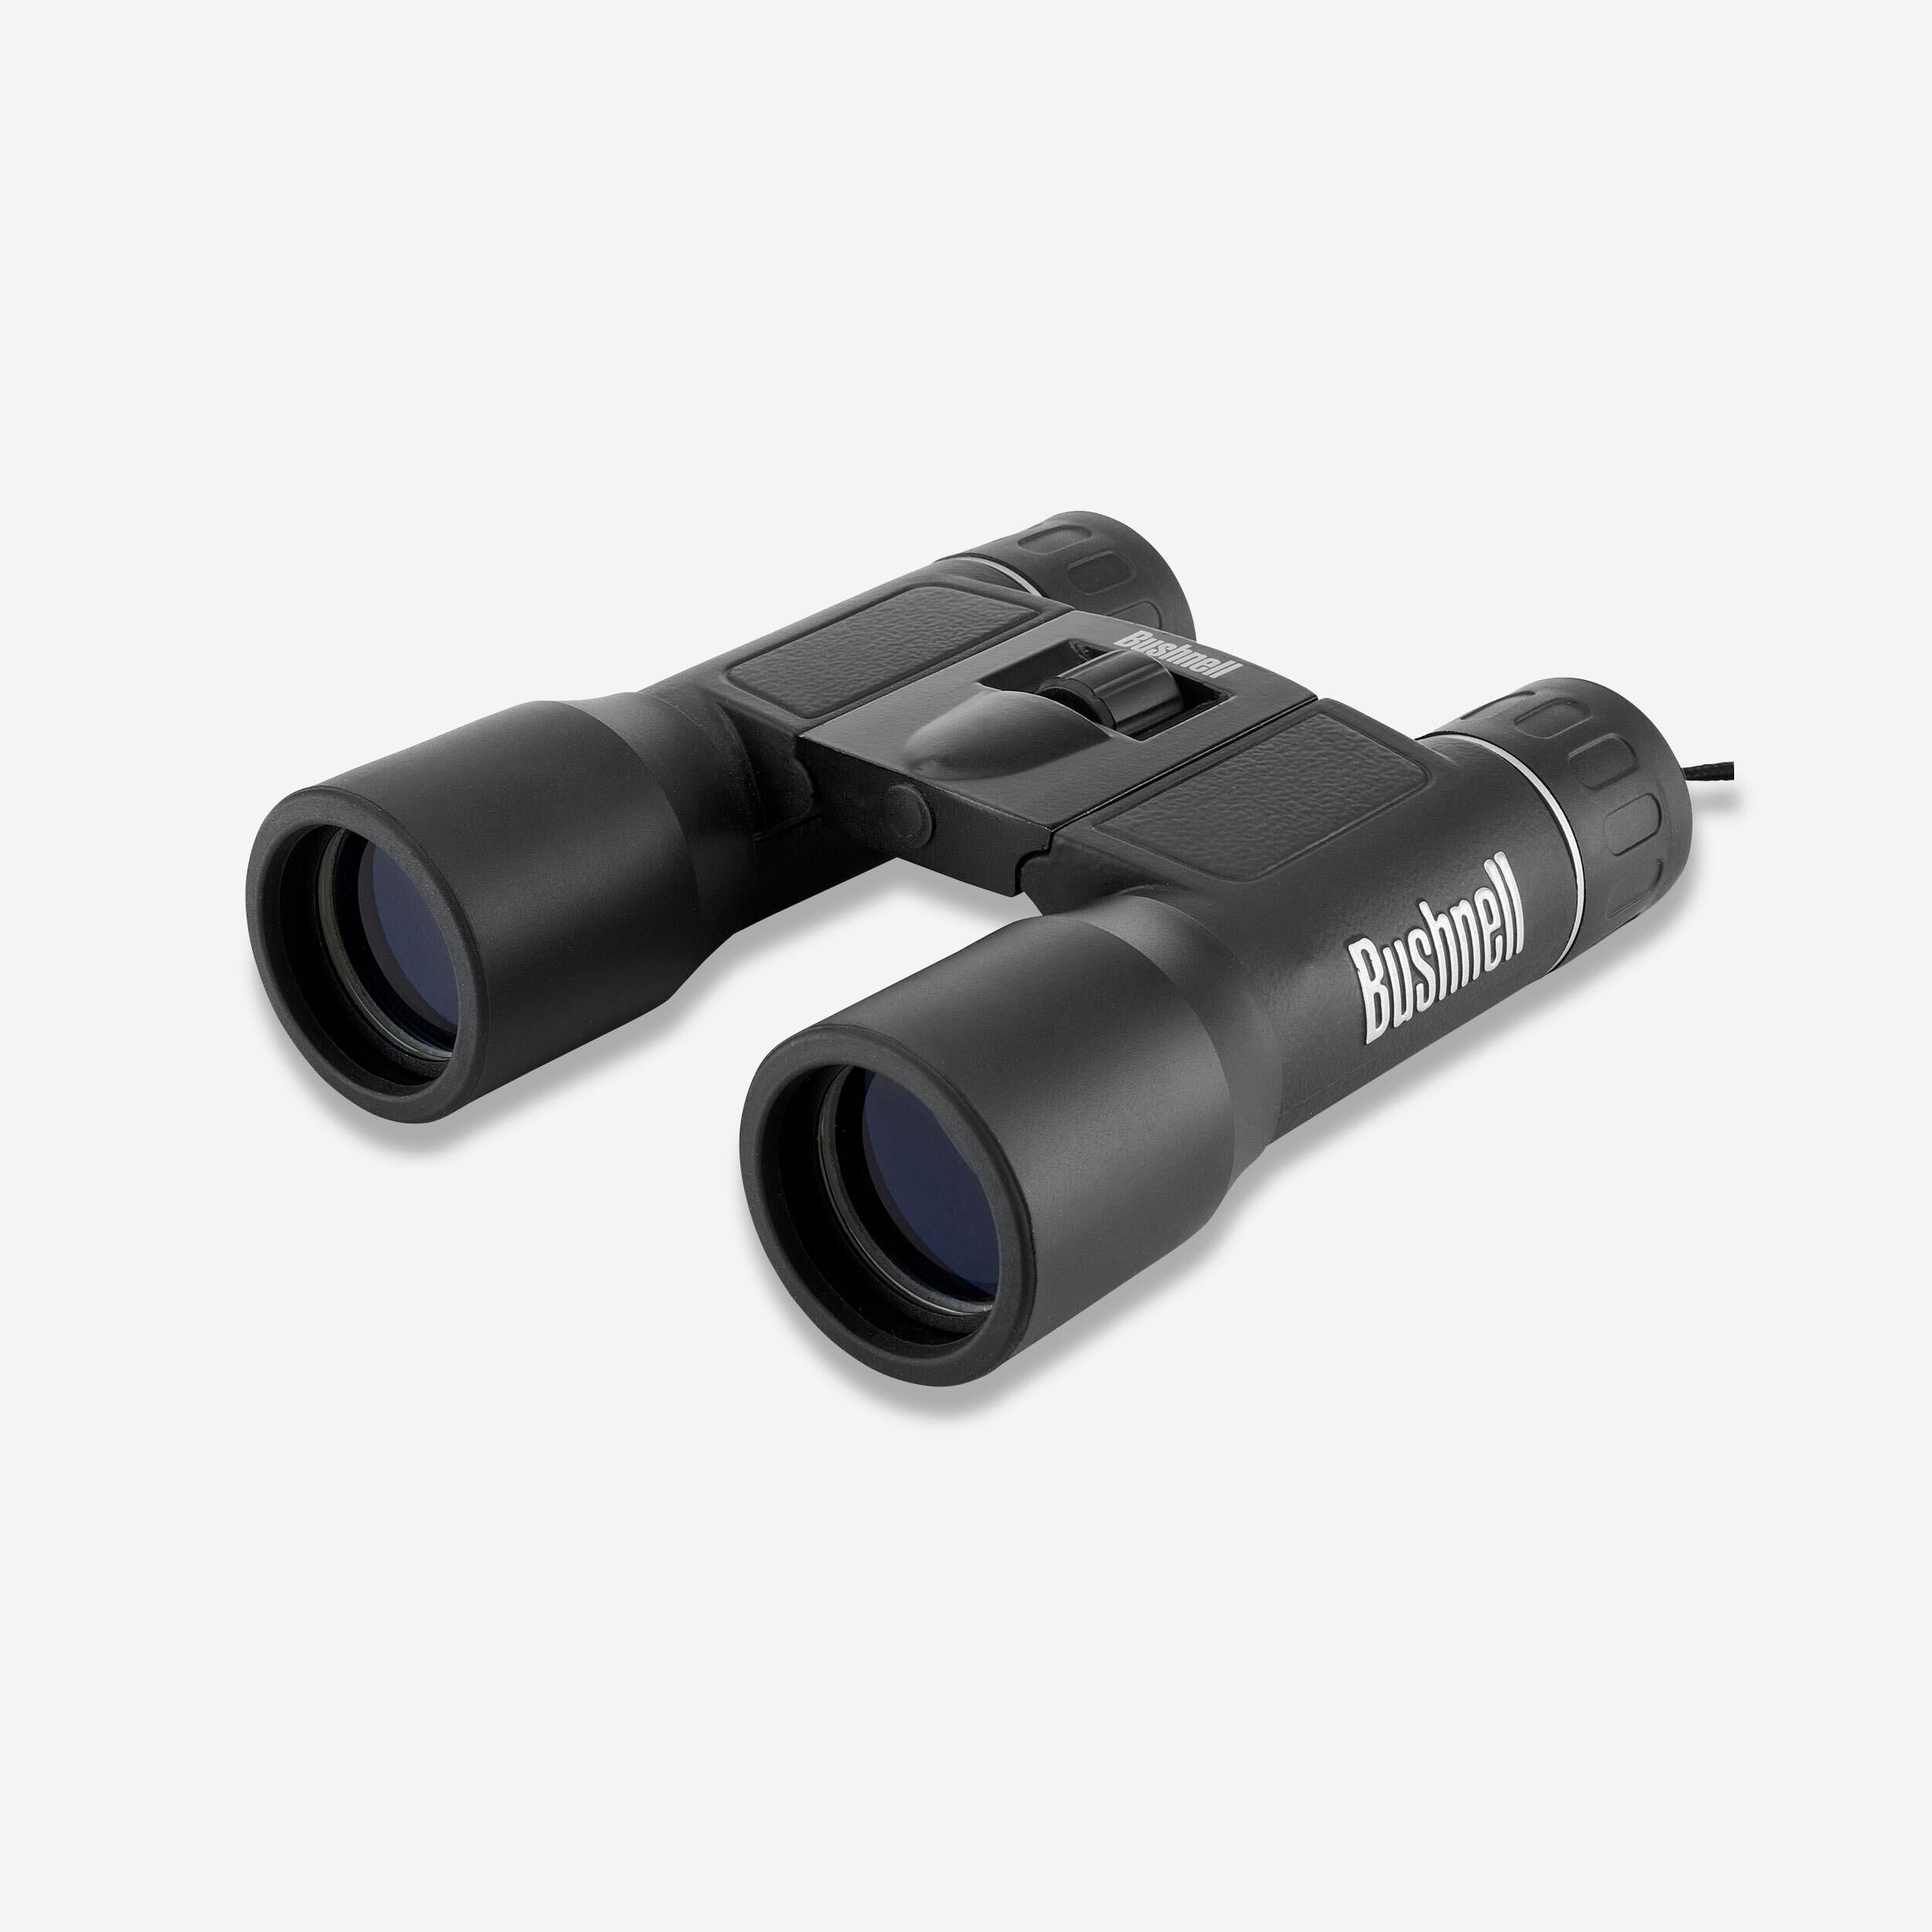 BUSHNELL Adult Adjustable binoculars x12 Magnification